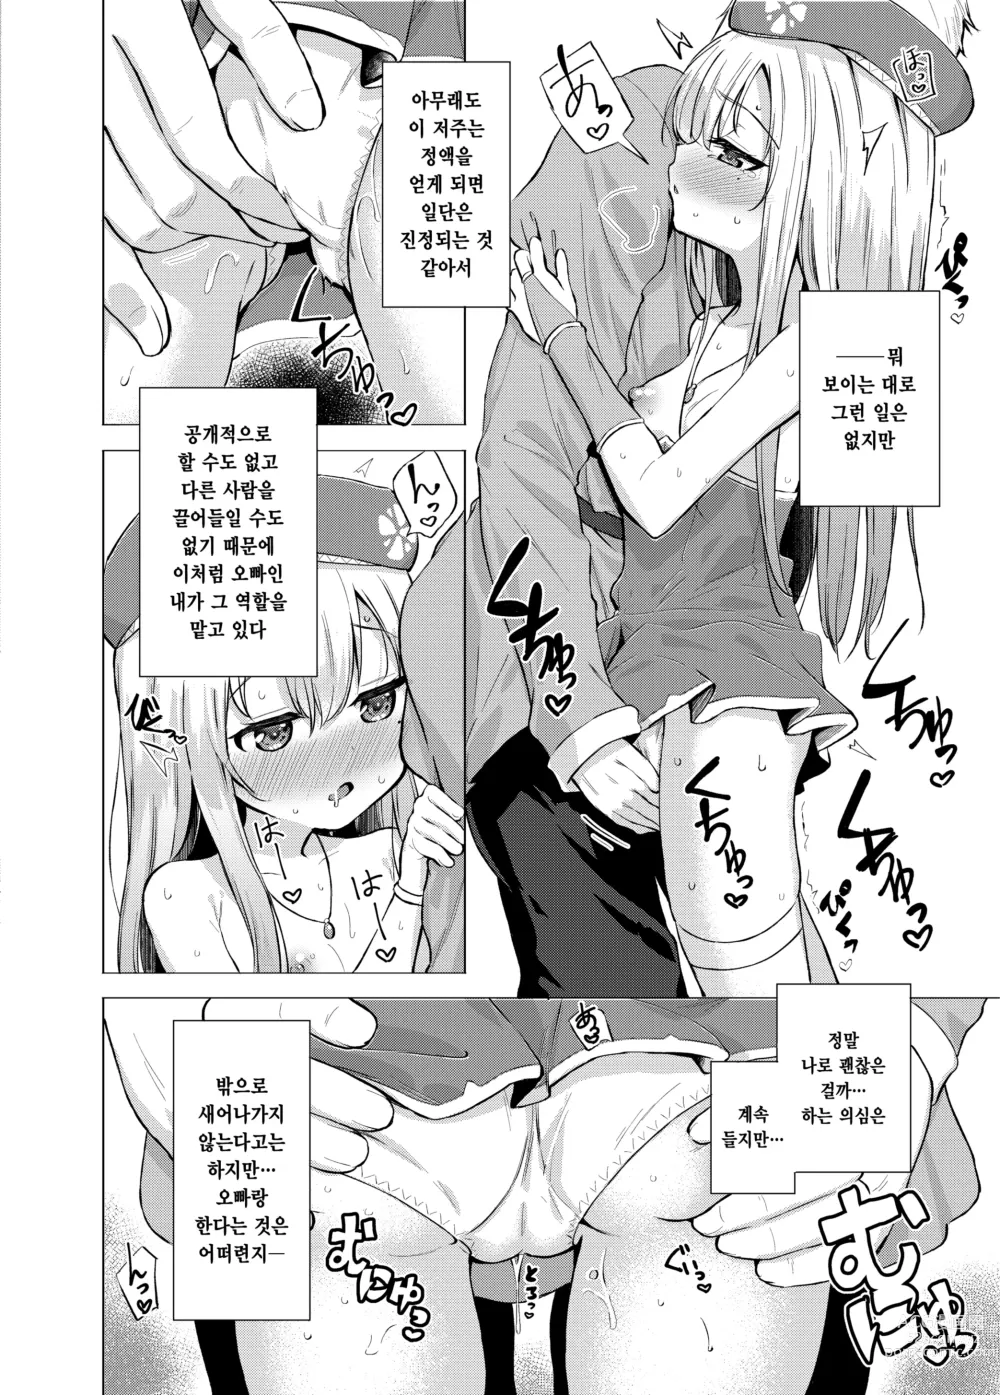 Page 6 of doujinshi 성스럽고 성스러운 여동생이랑.